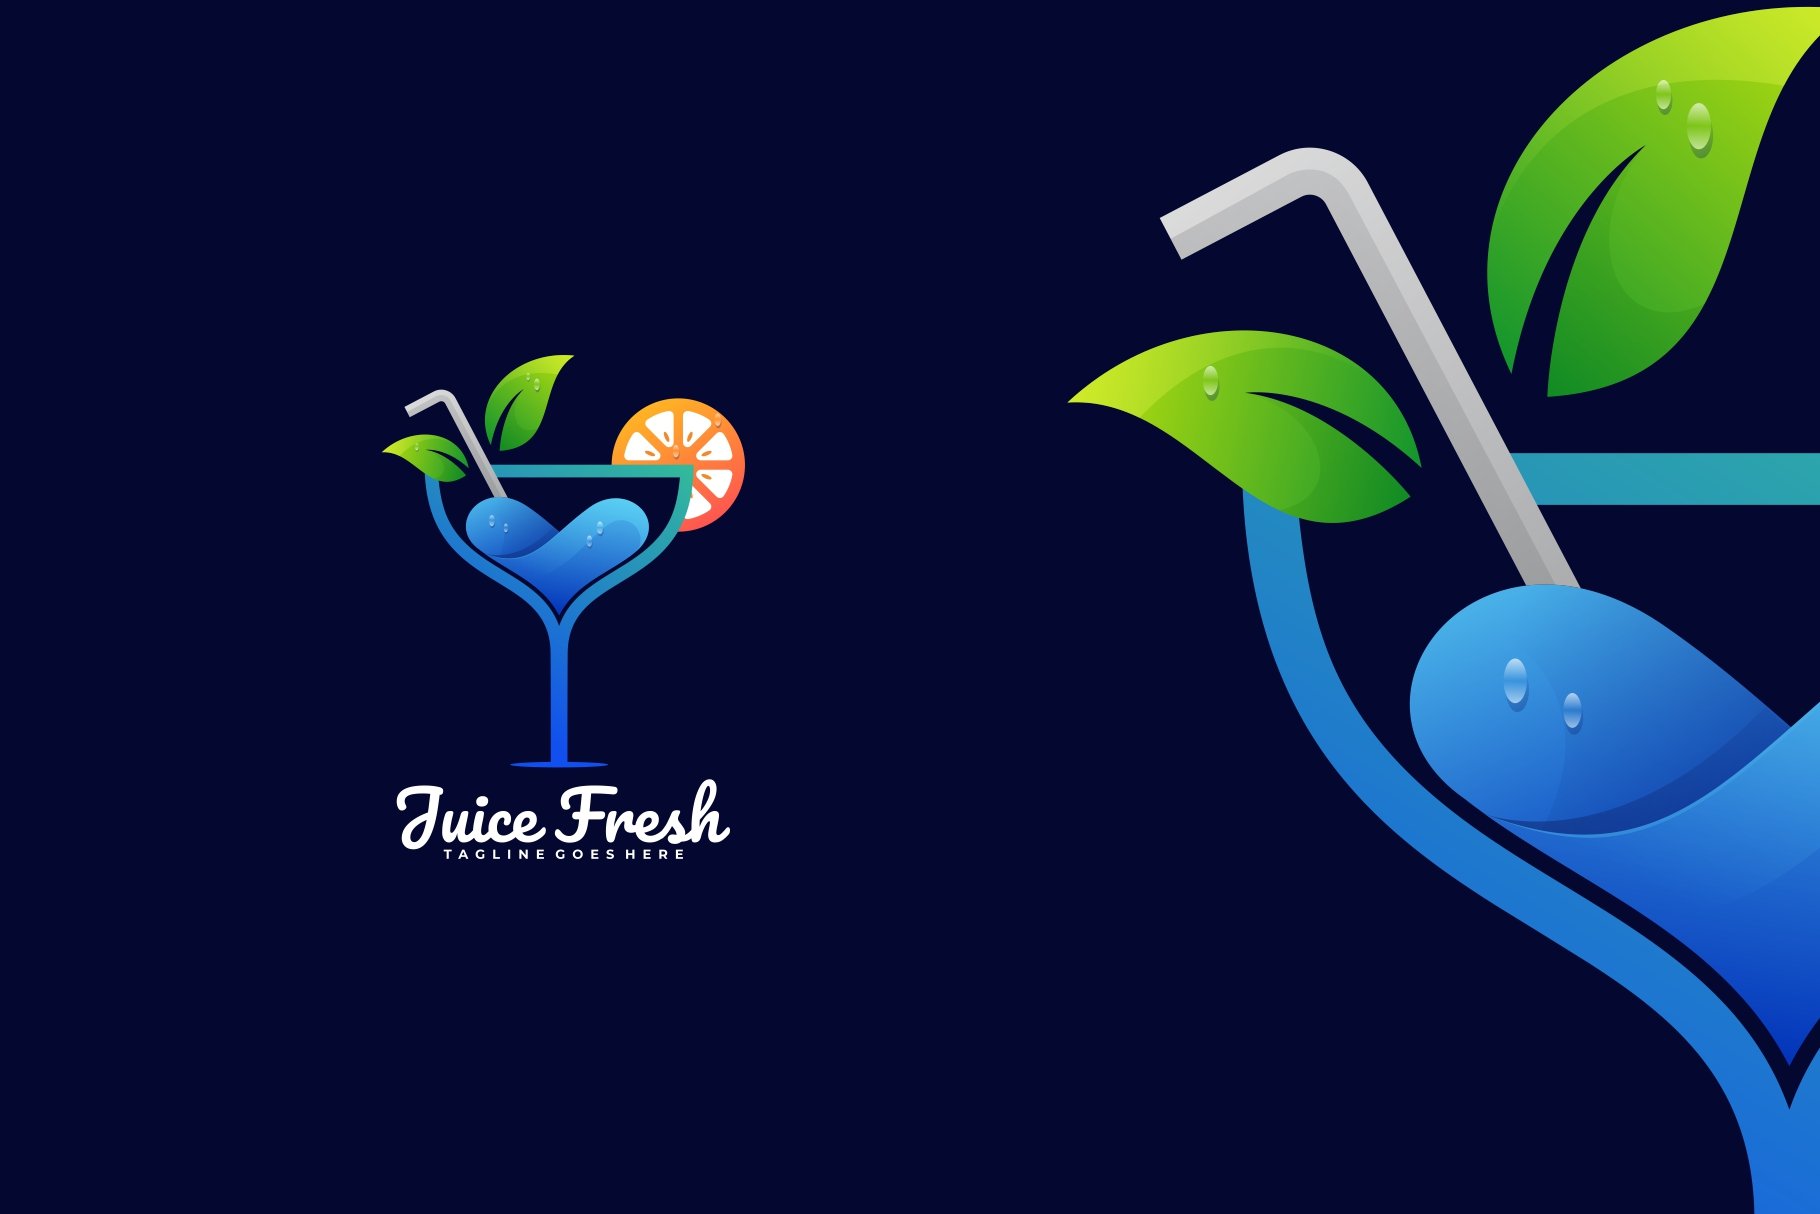 Juice Gradient Logo cover image.